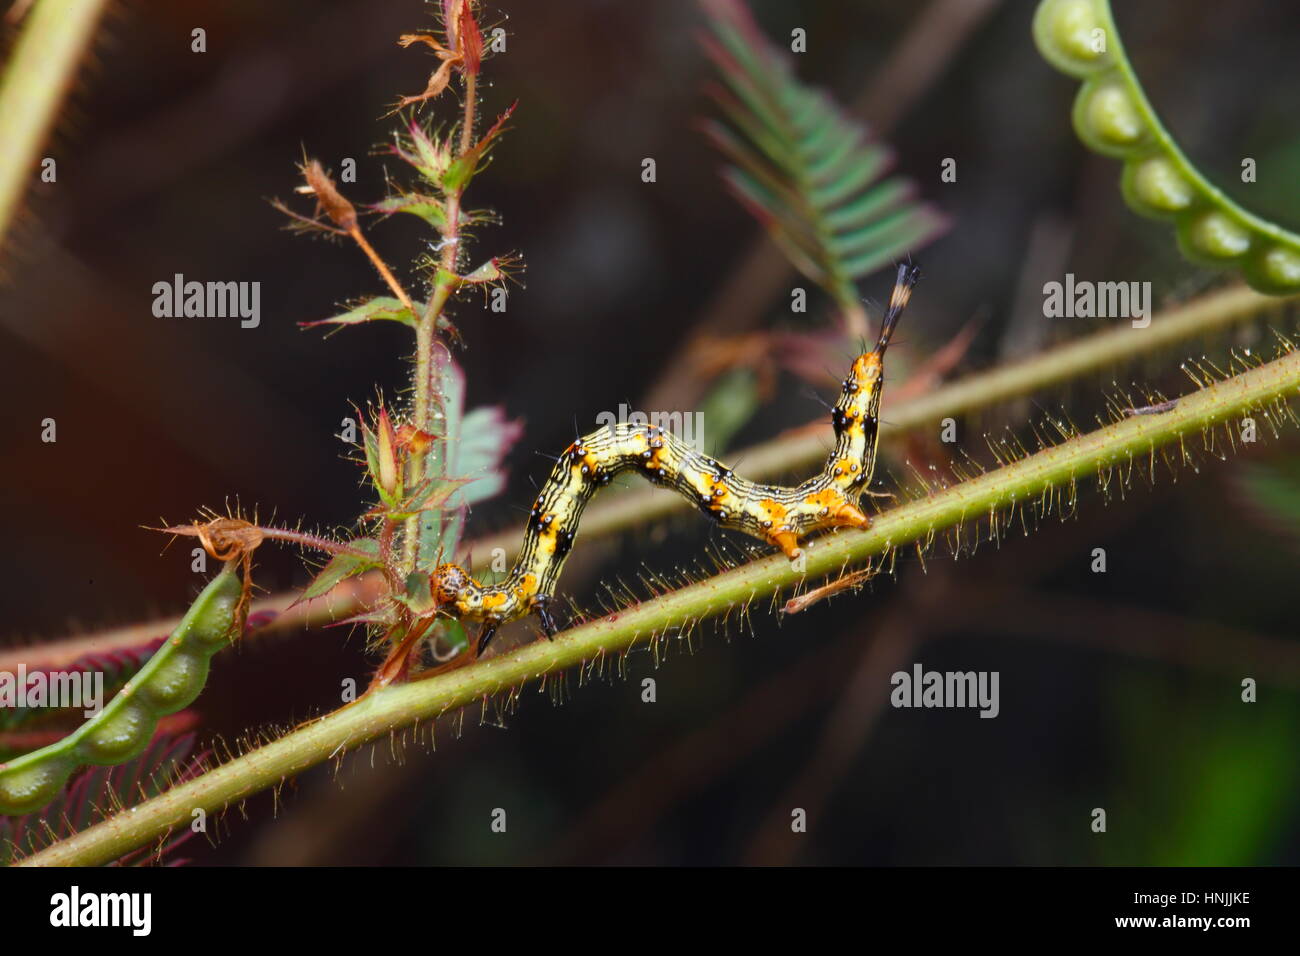 A legume caterpillar, Selenisa sueroides, feeding on a legume plant. Stock Photo